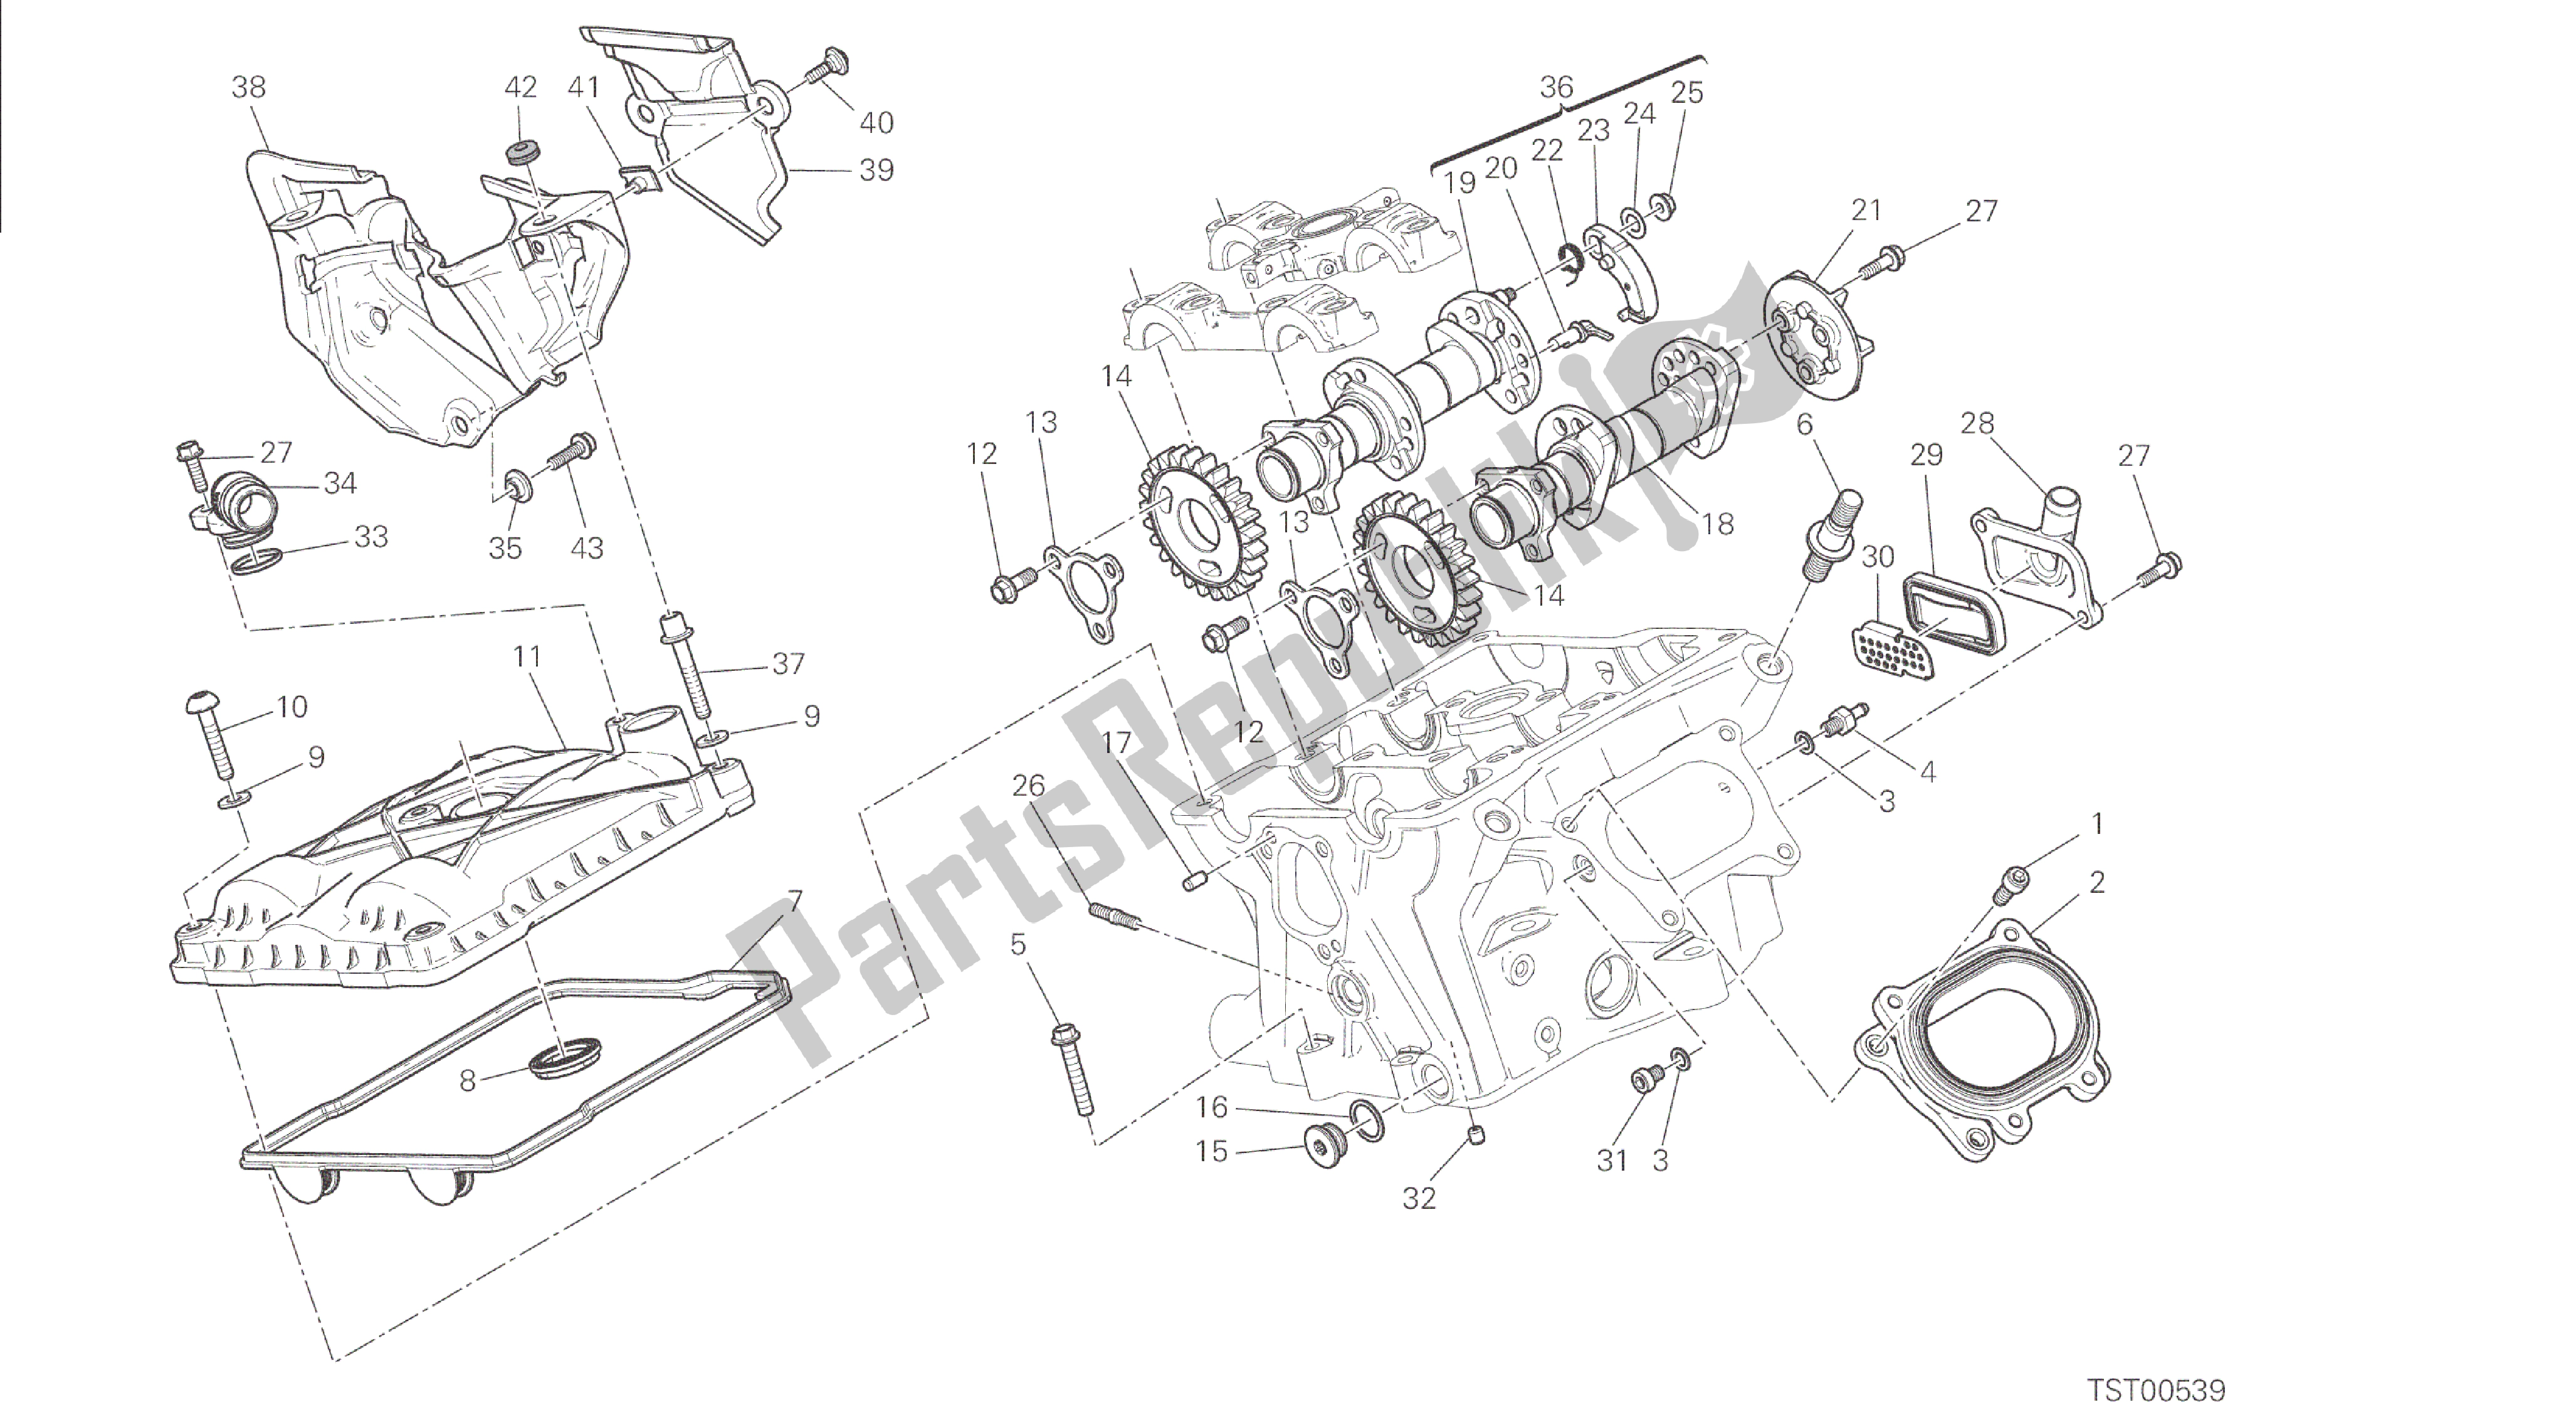 Alle onderdelen voor de Tekening 13a - Verticale Cilinderkop - Timing [mod: 1299; Xst: Aus, Eur, Fra, Jap] Groepsmotor van de Ducati Panigale 1299 2015